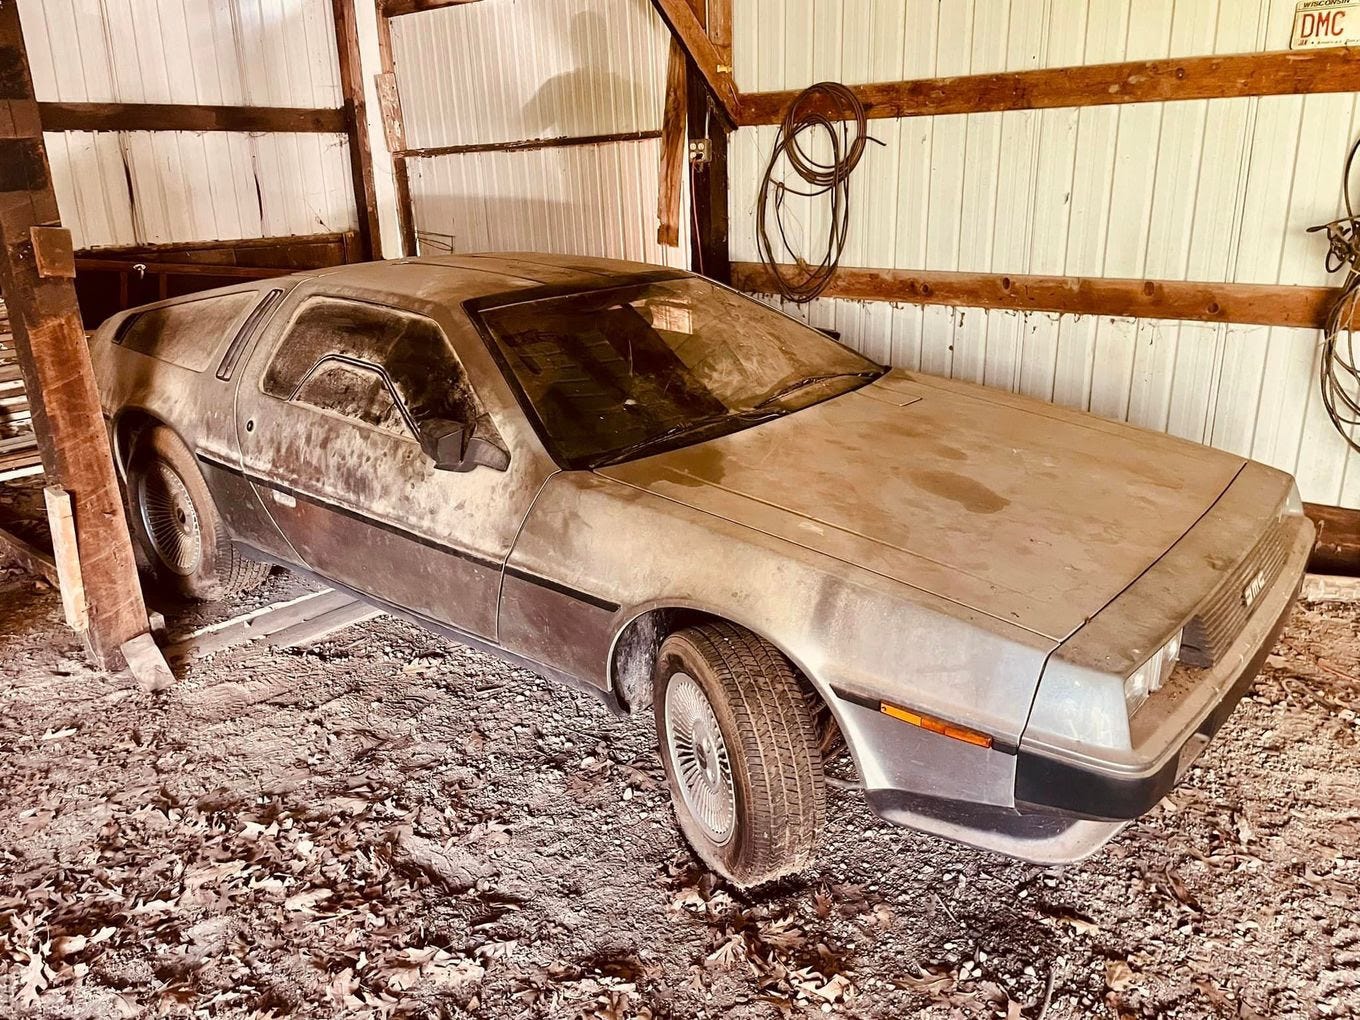 The DeLorean DMC-12 was found this month. (Kevin Thomas/DeLorean Nation)